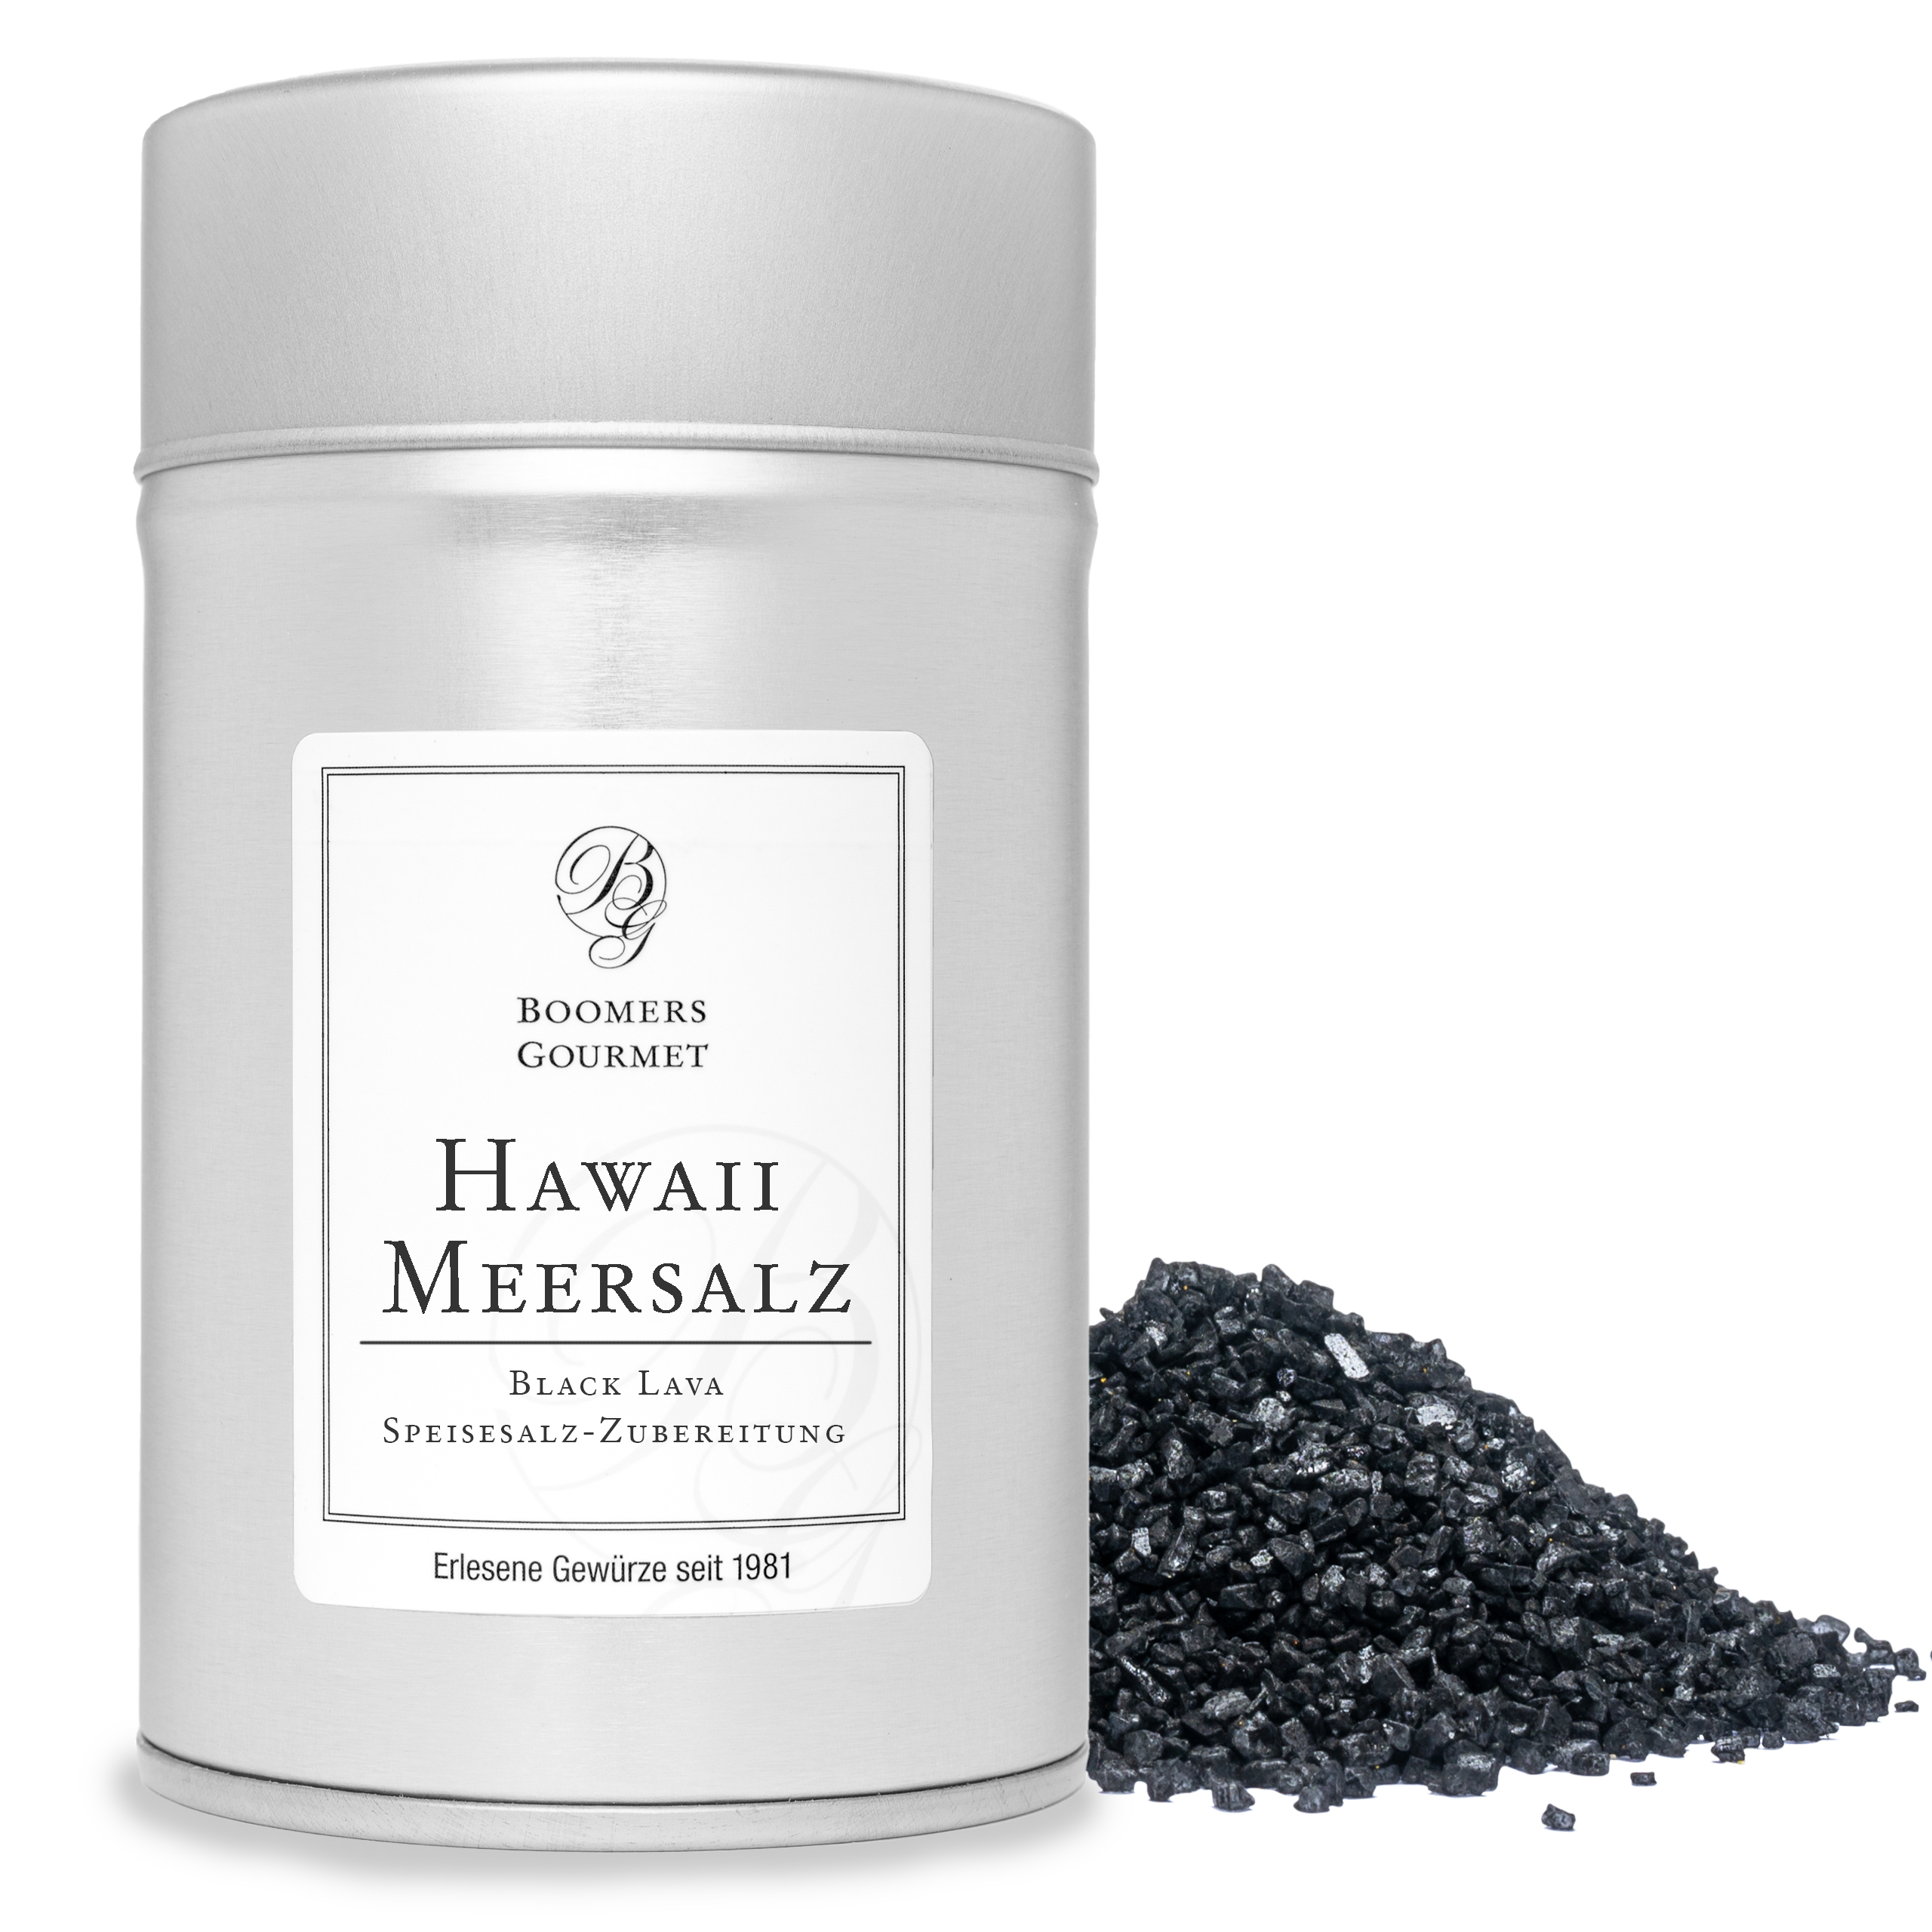 Hawaii Meersalz "Black Lava"